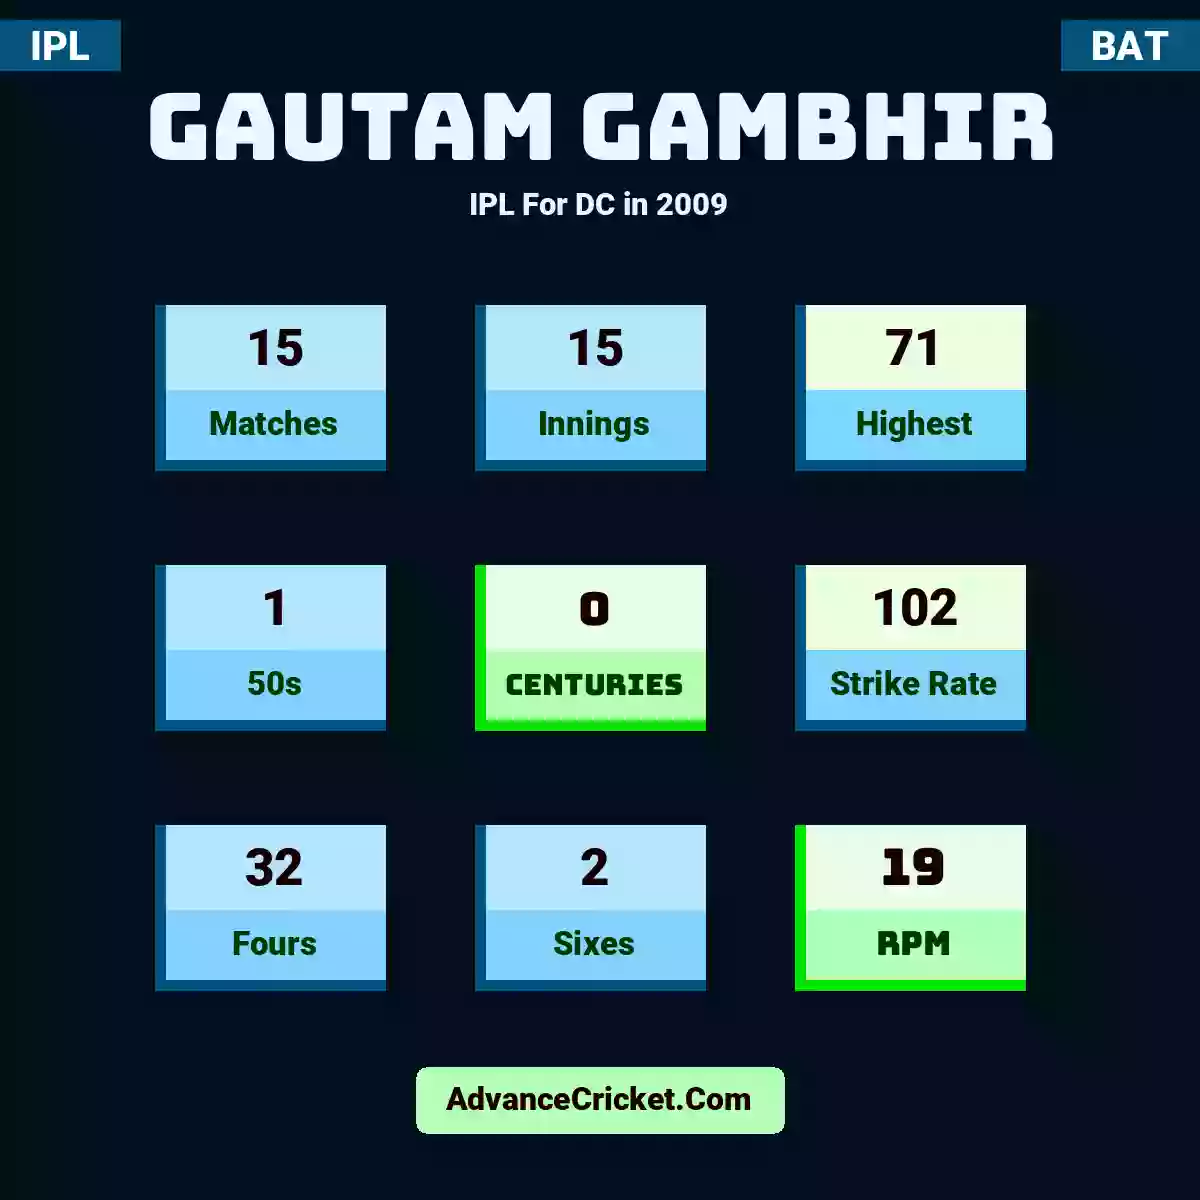 Gautam Gambhir IPL  For DC in 2009, Gautam Gambhir played 15 matches, scored 71 runs as highest, 1 half-centuries, and 0 centuries, with a strike rate of 102. G.Gambhir hit 32 fours and 2 sixes, with an RPM of 19.